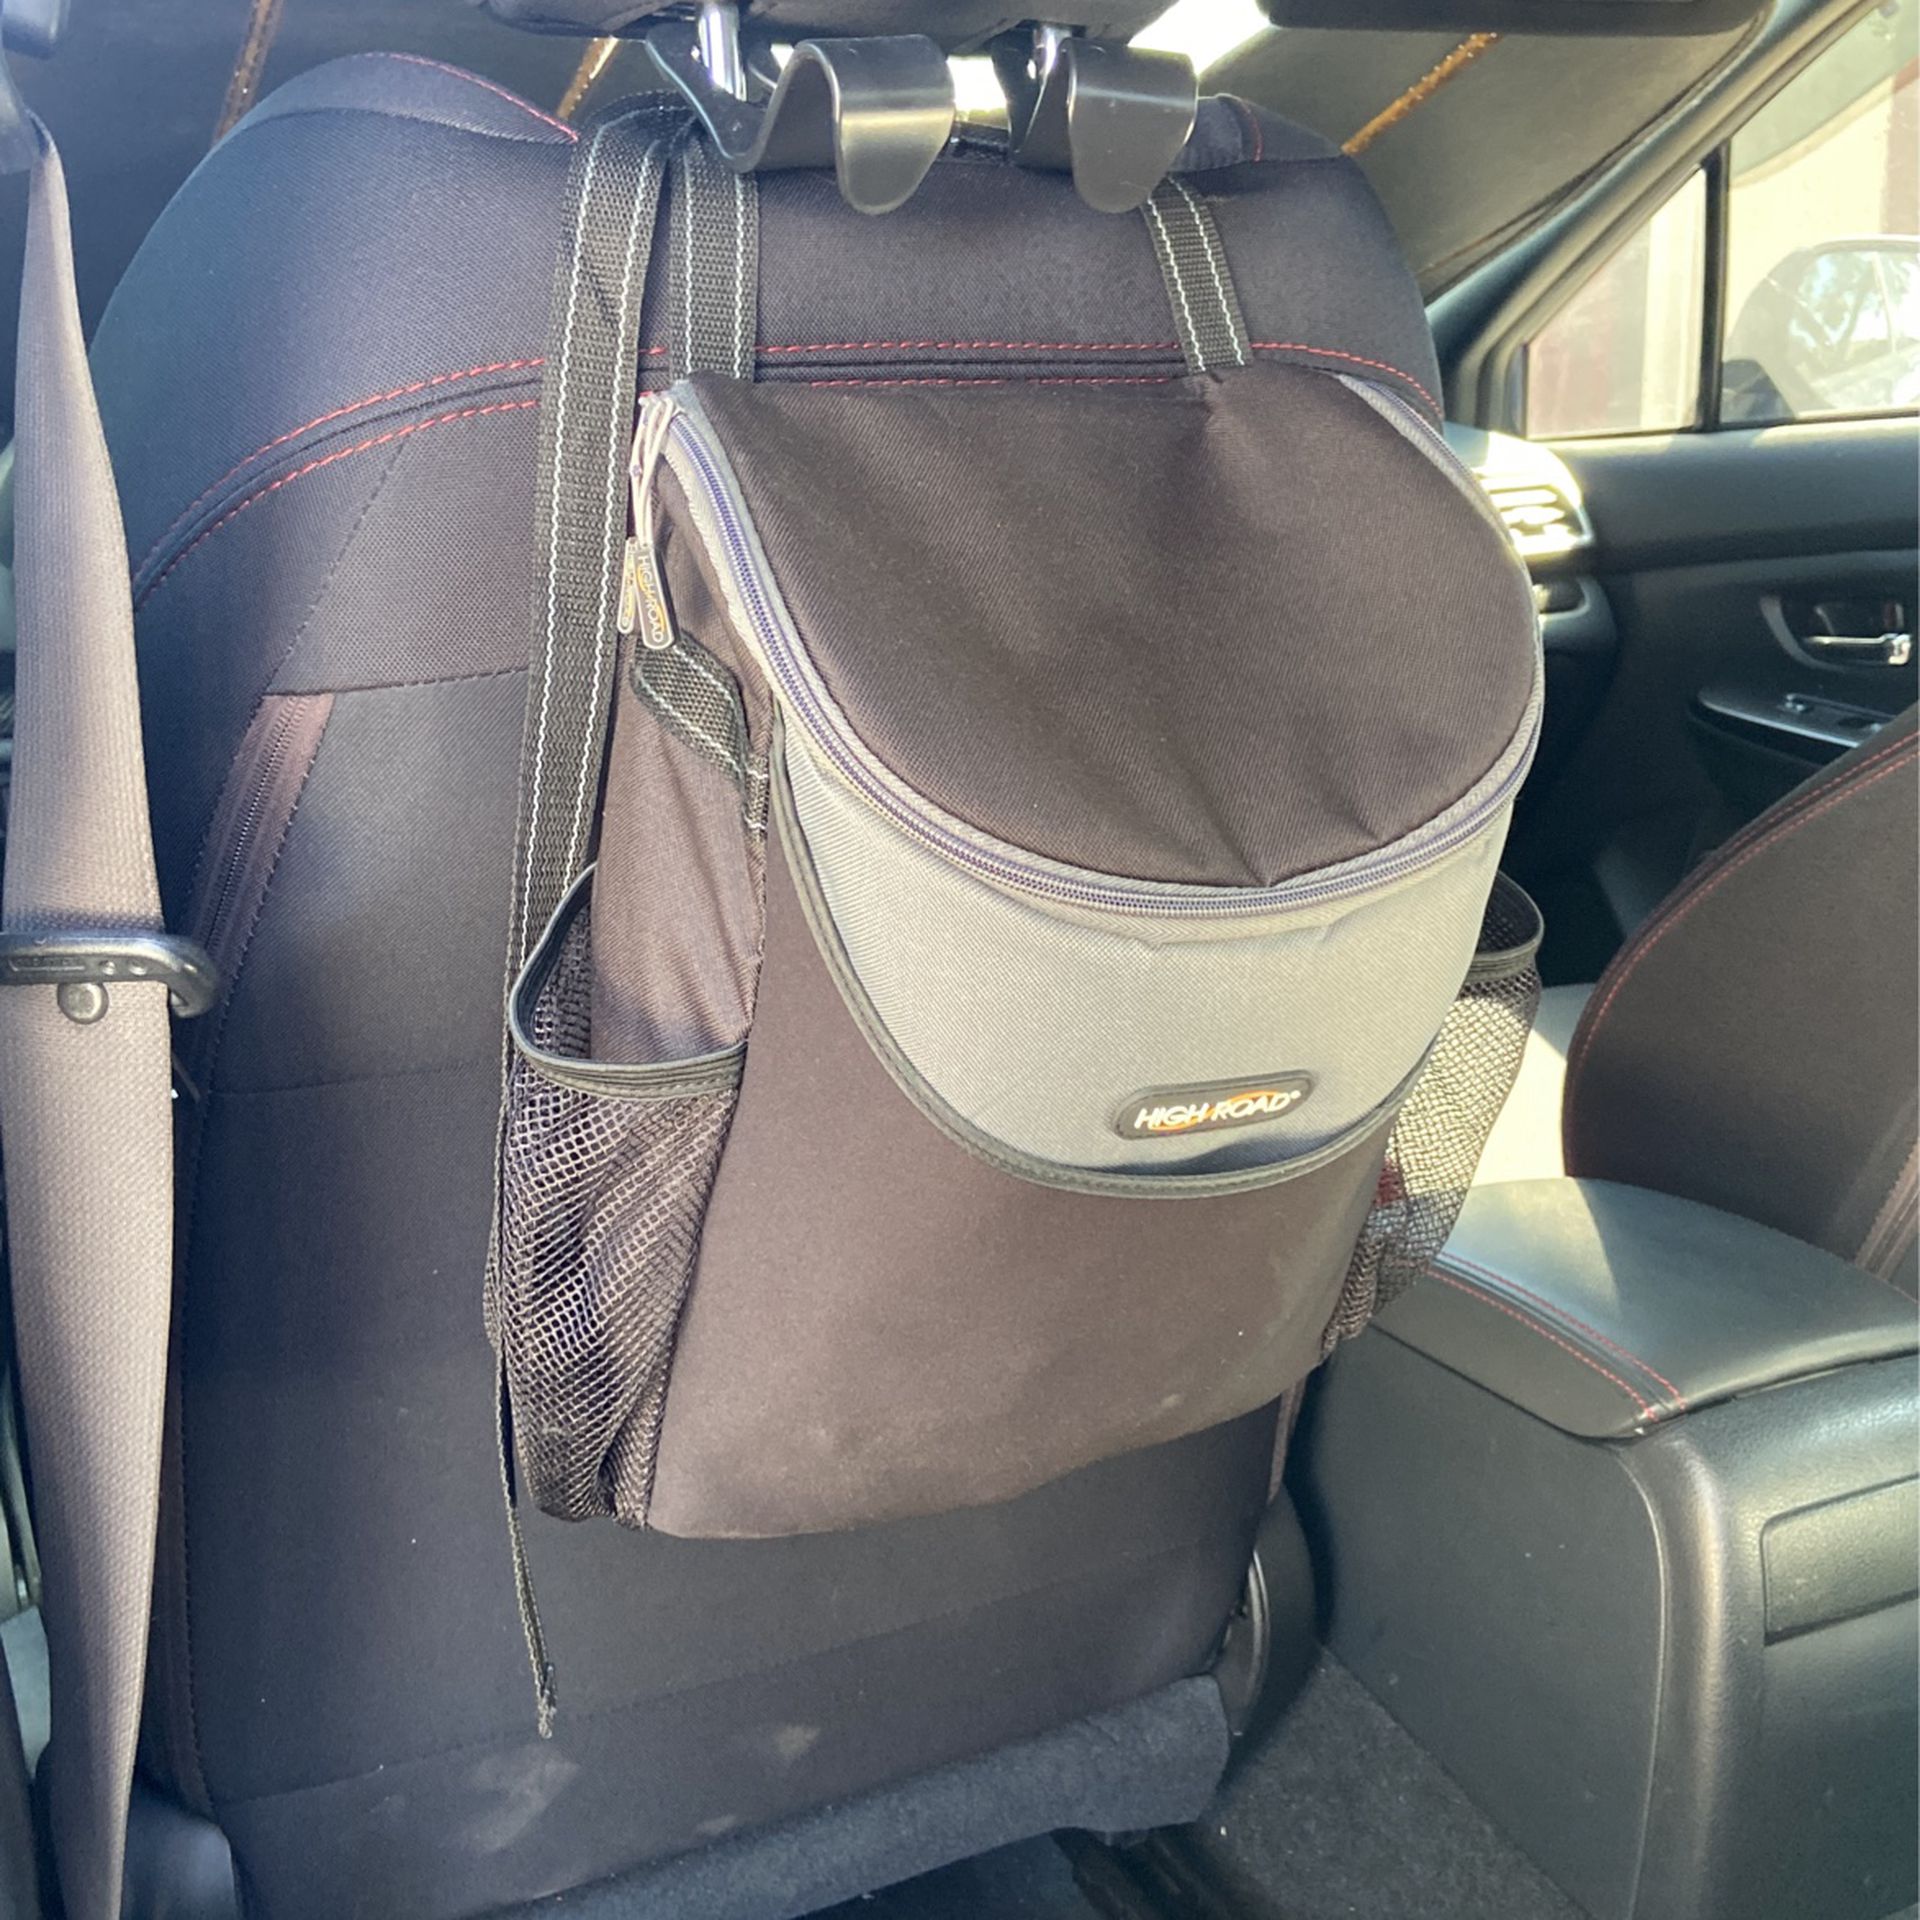 Highroad Car Organizer Seat Bag/ Backpack